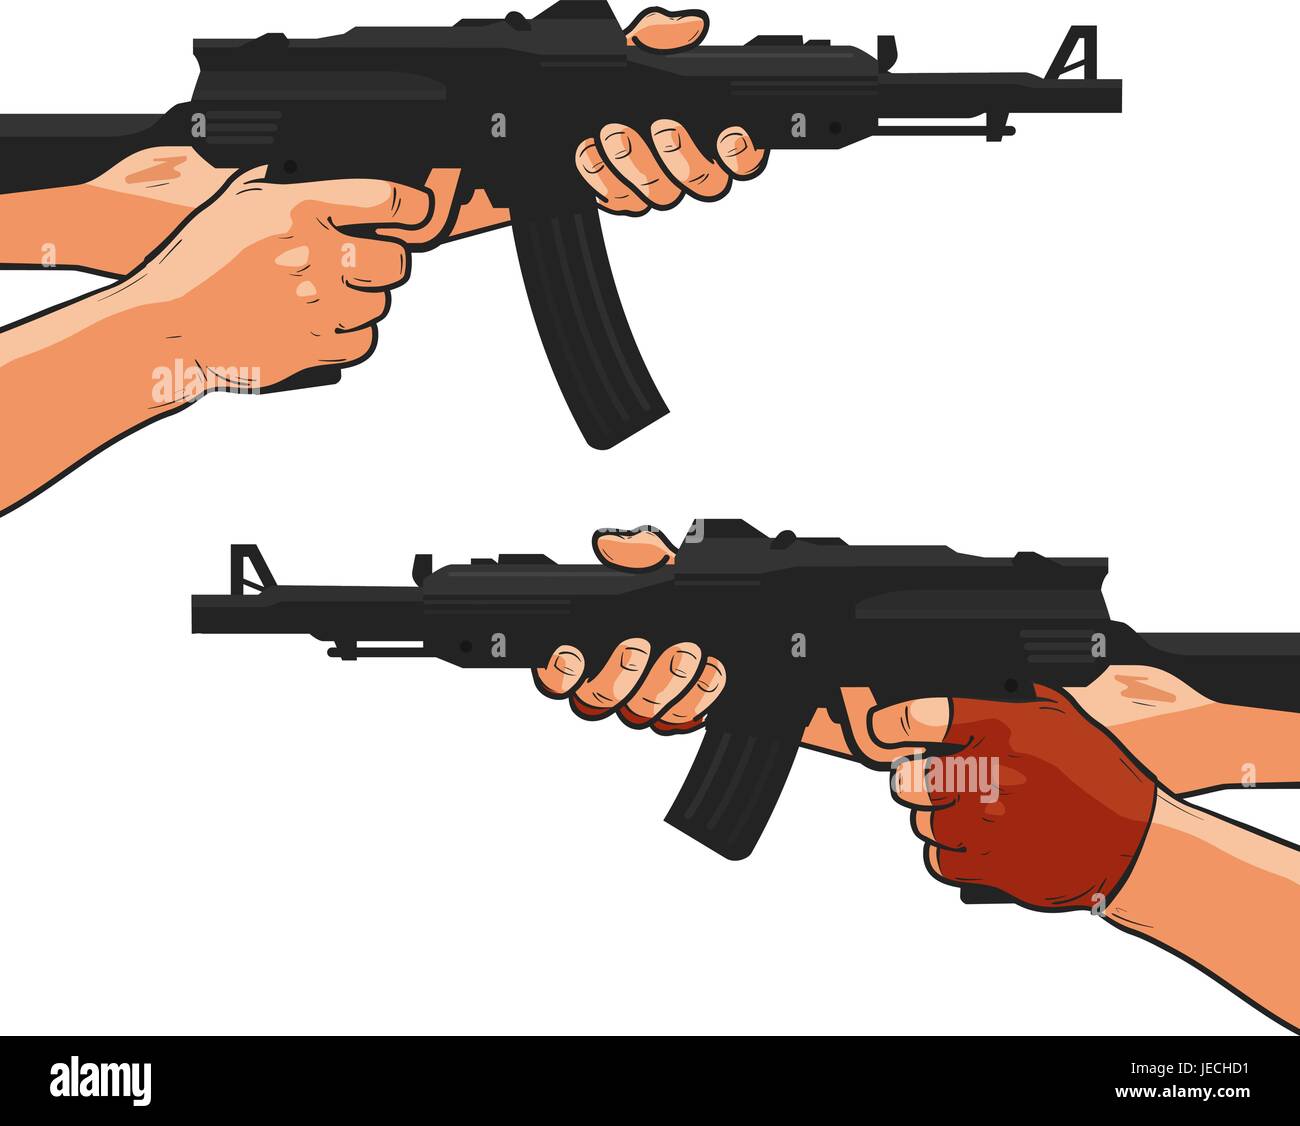 Angriff Gewehr, Handfeuerwaffe, Maschinengewehr, Schrotflinte. Cartoon Comic-Stil-Vektor-illustration Stock Vektor